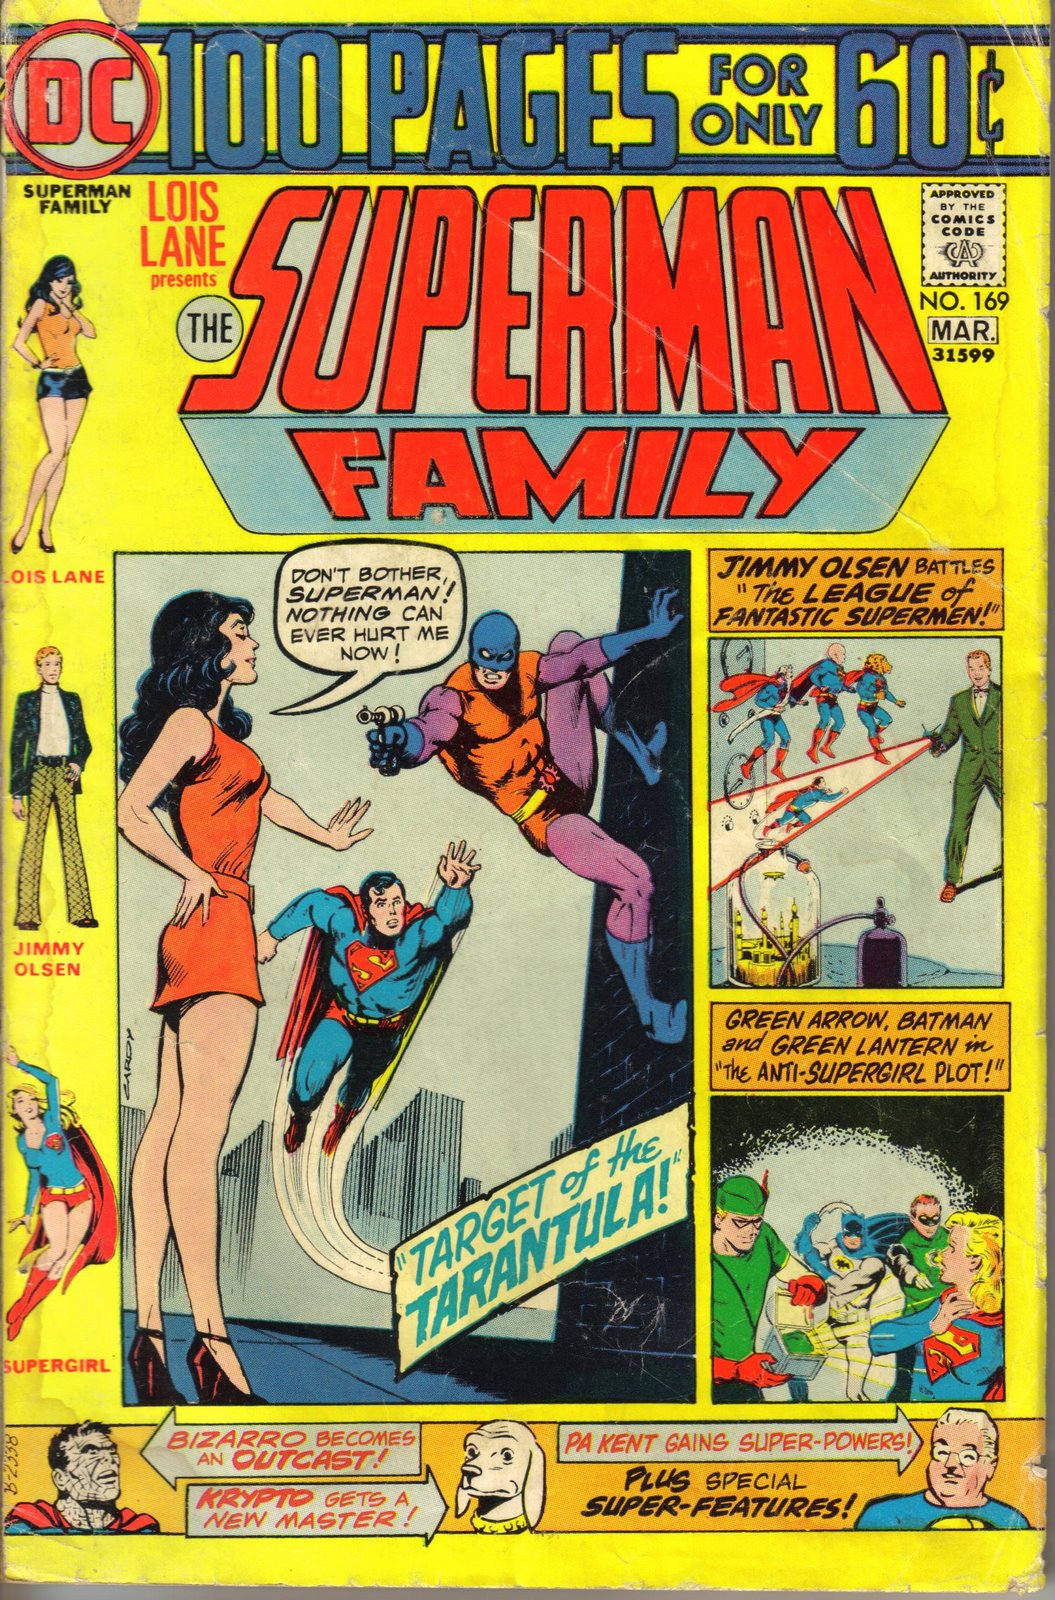 [supermanfamily169.jpg]